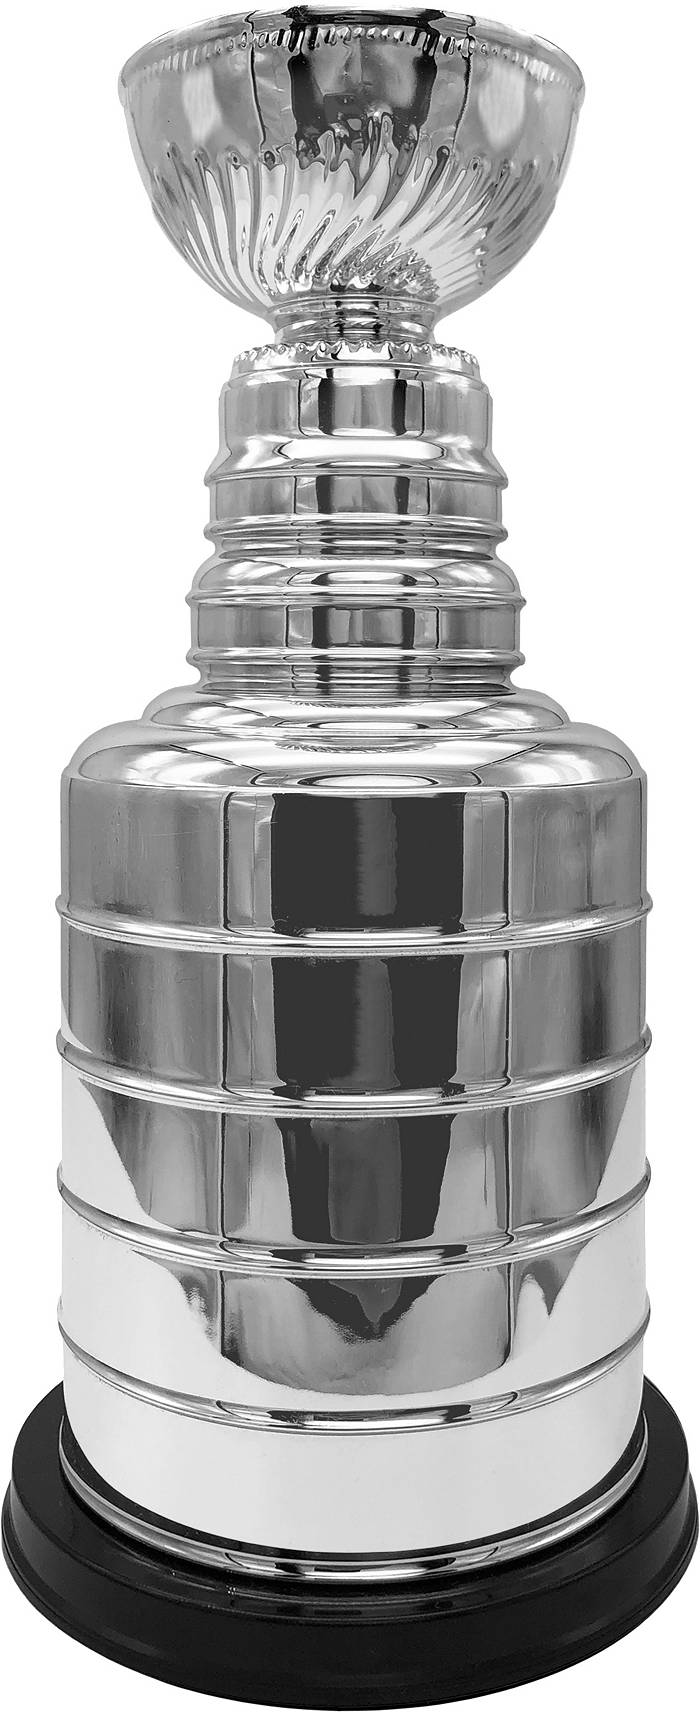 NHL Mini Stanley Cup Replicas